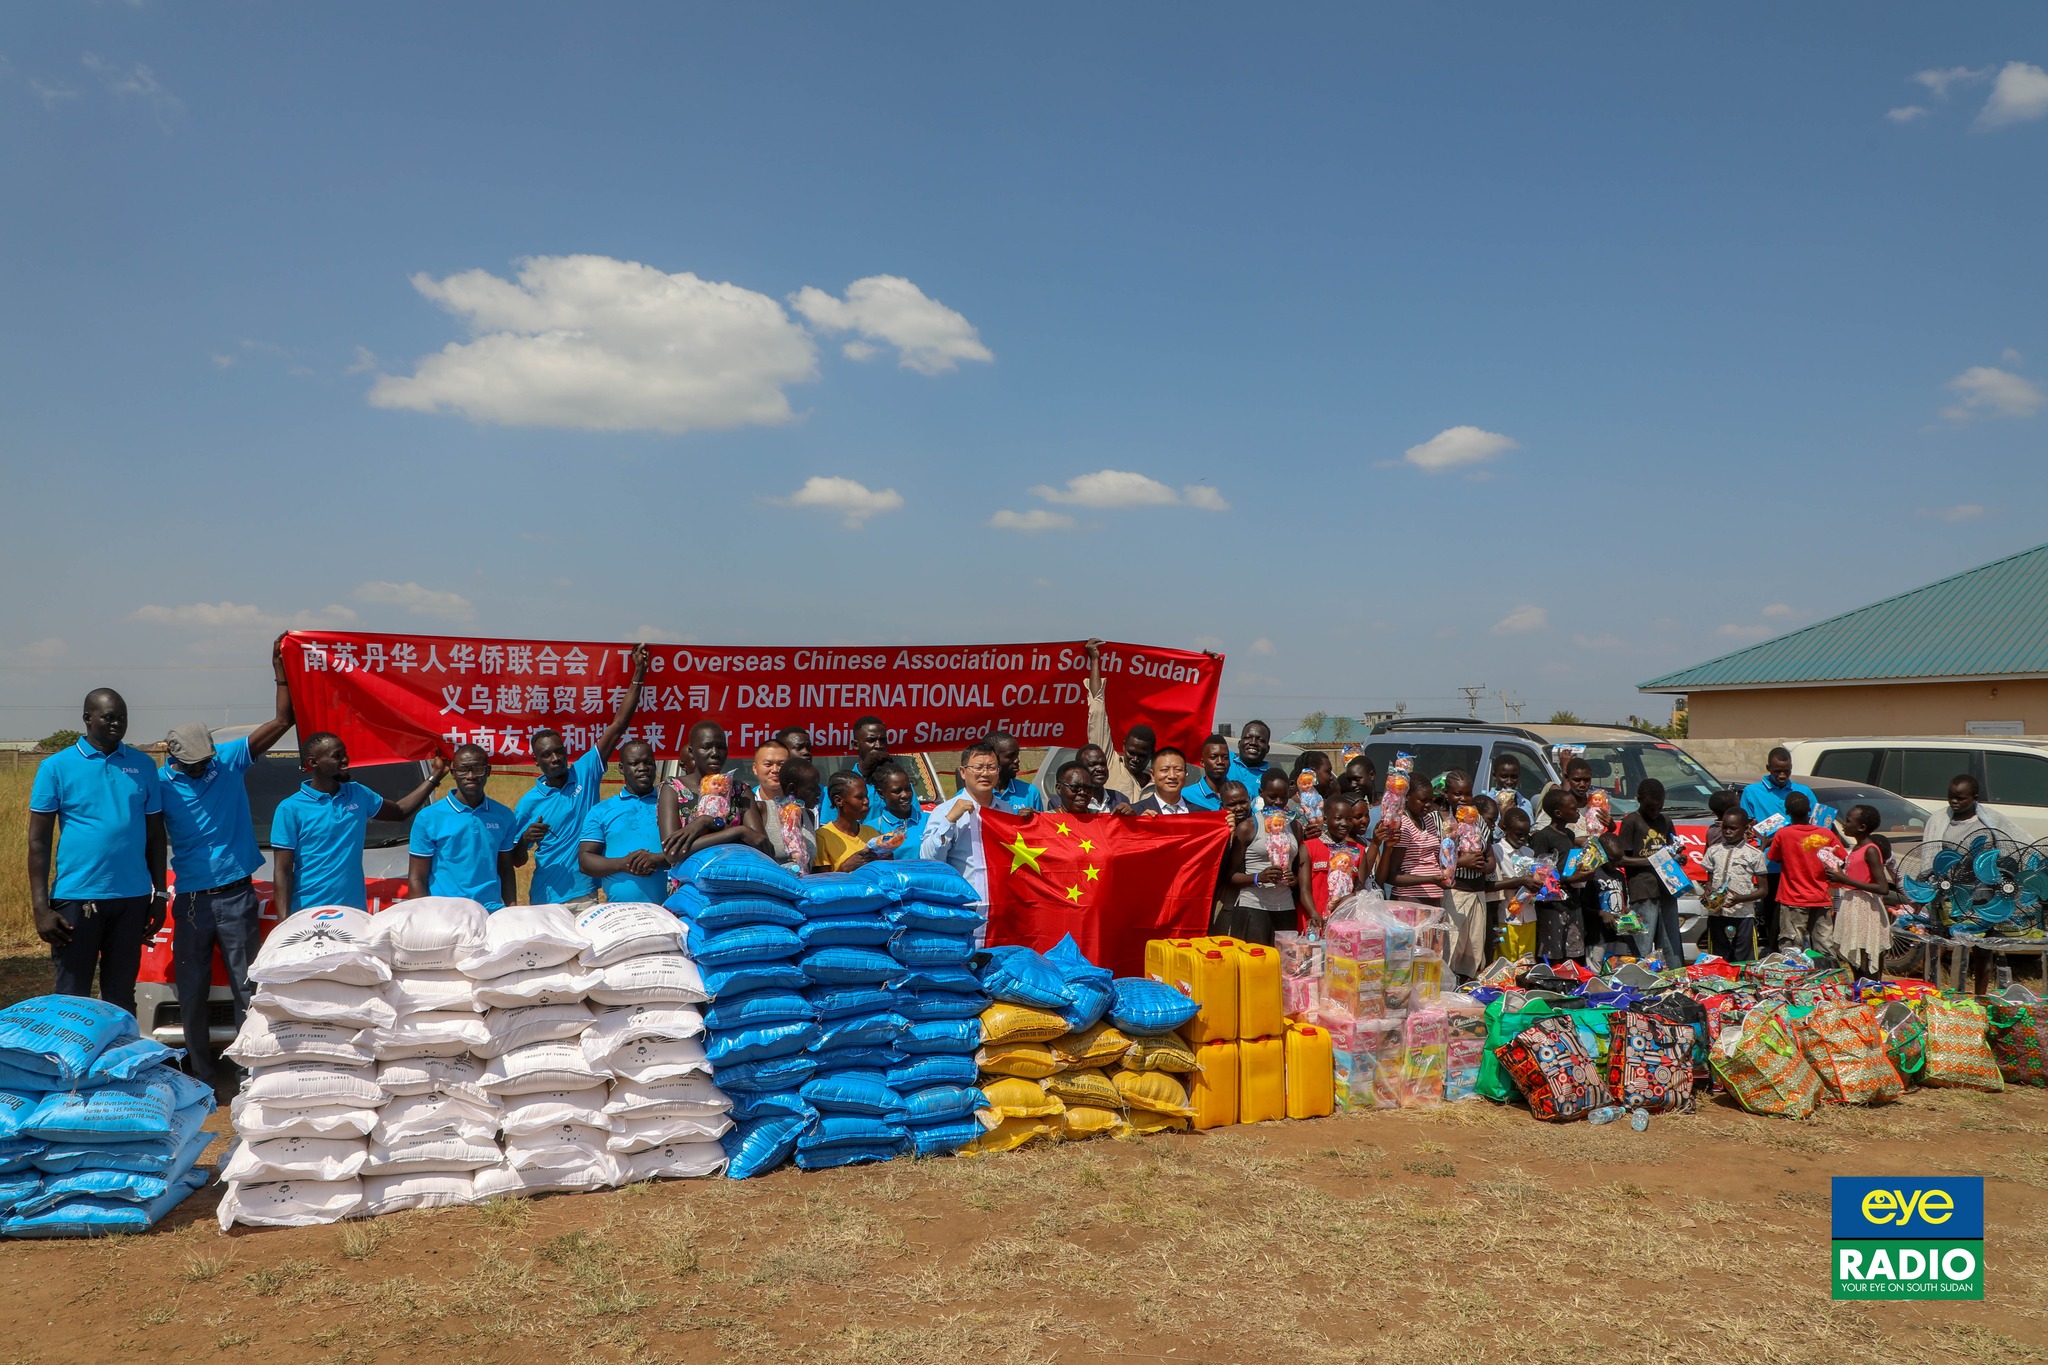 Chinese association, company donate items to Juba orphanage